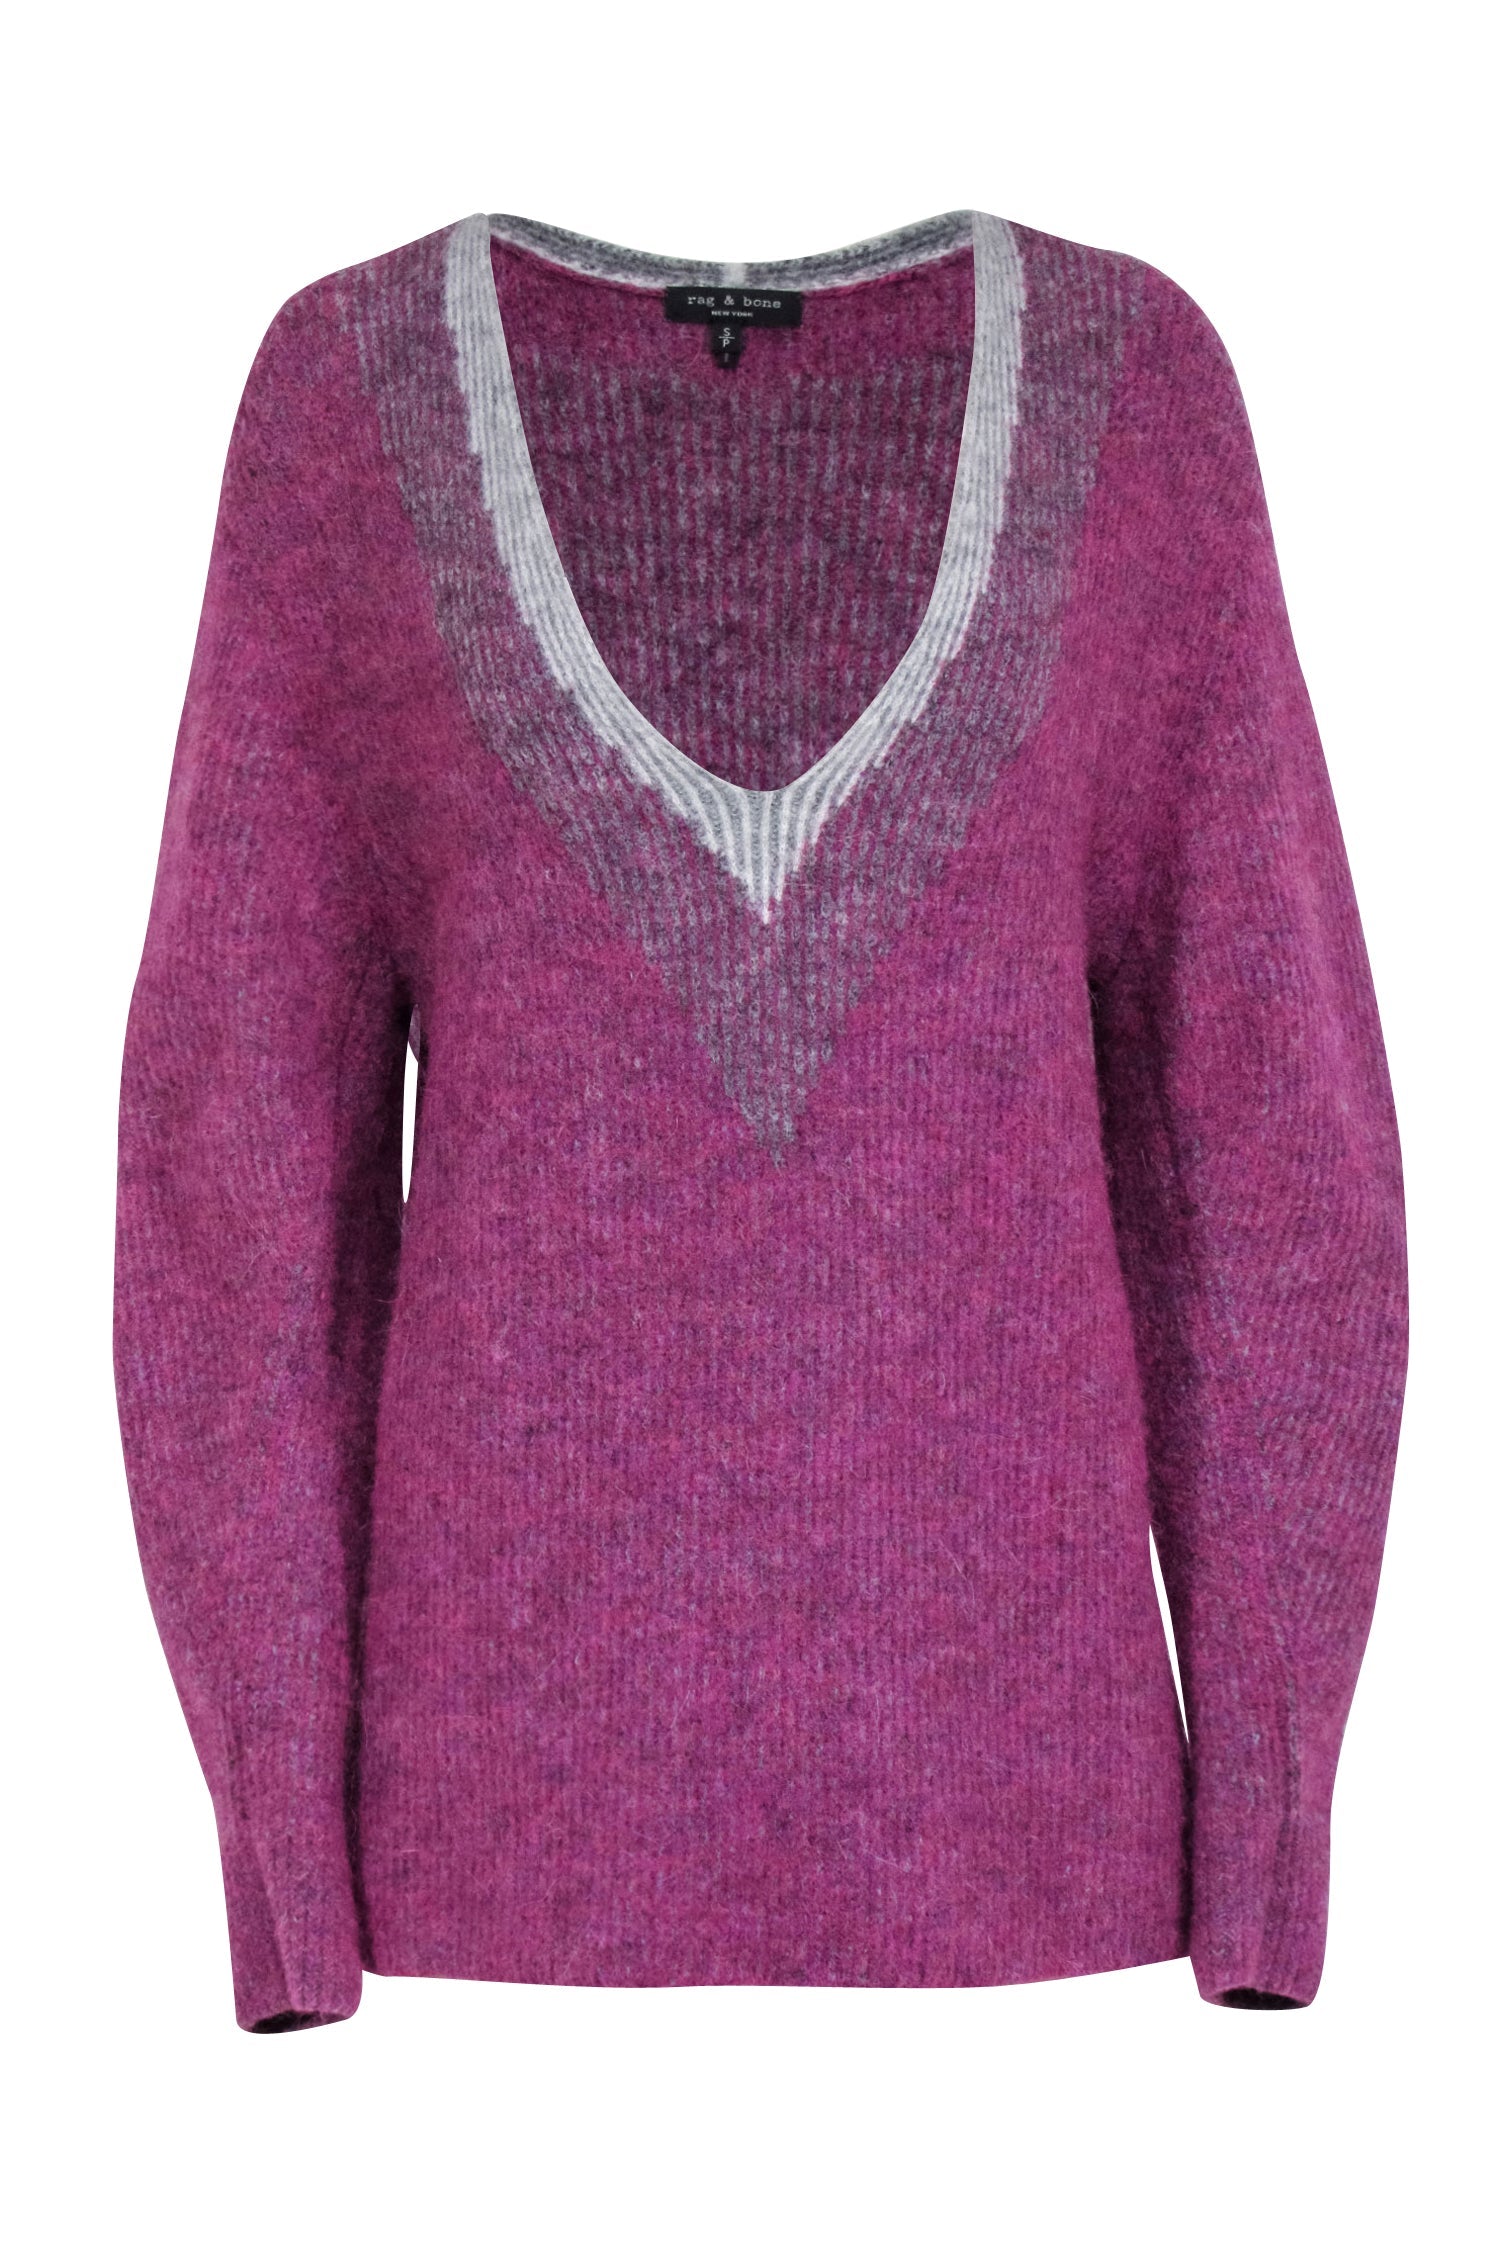 Rag & Bone - Magenta V-neck Oversized Sweater Sz S